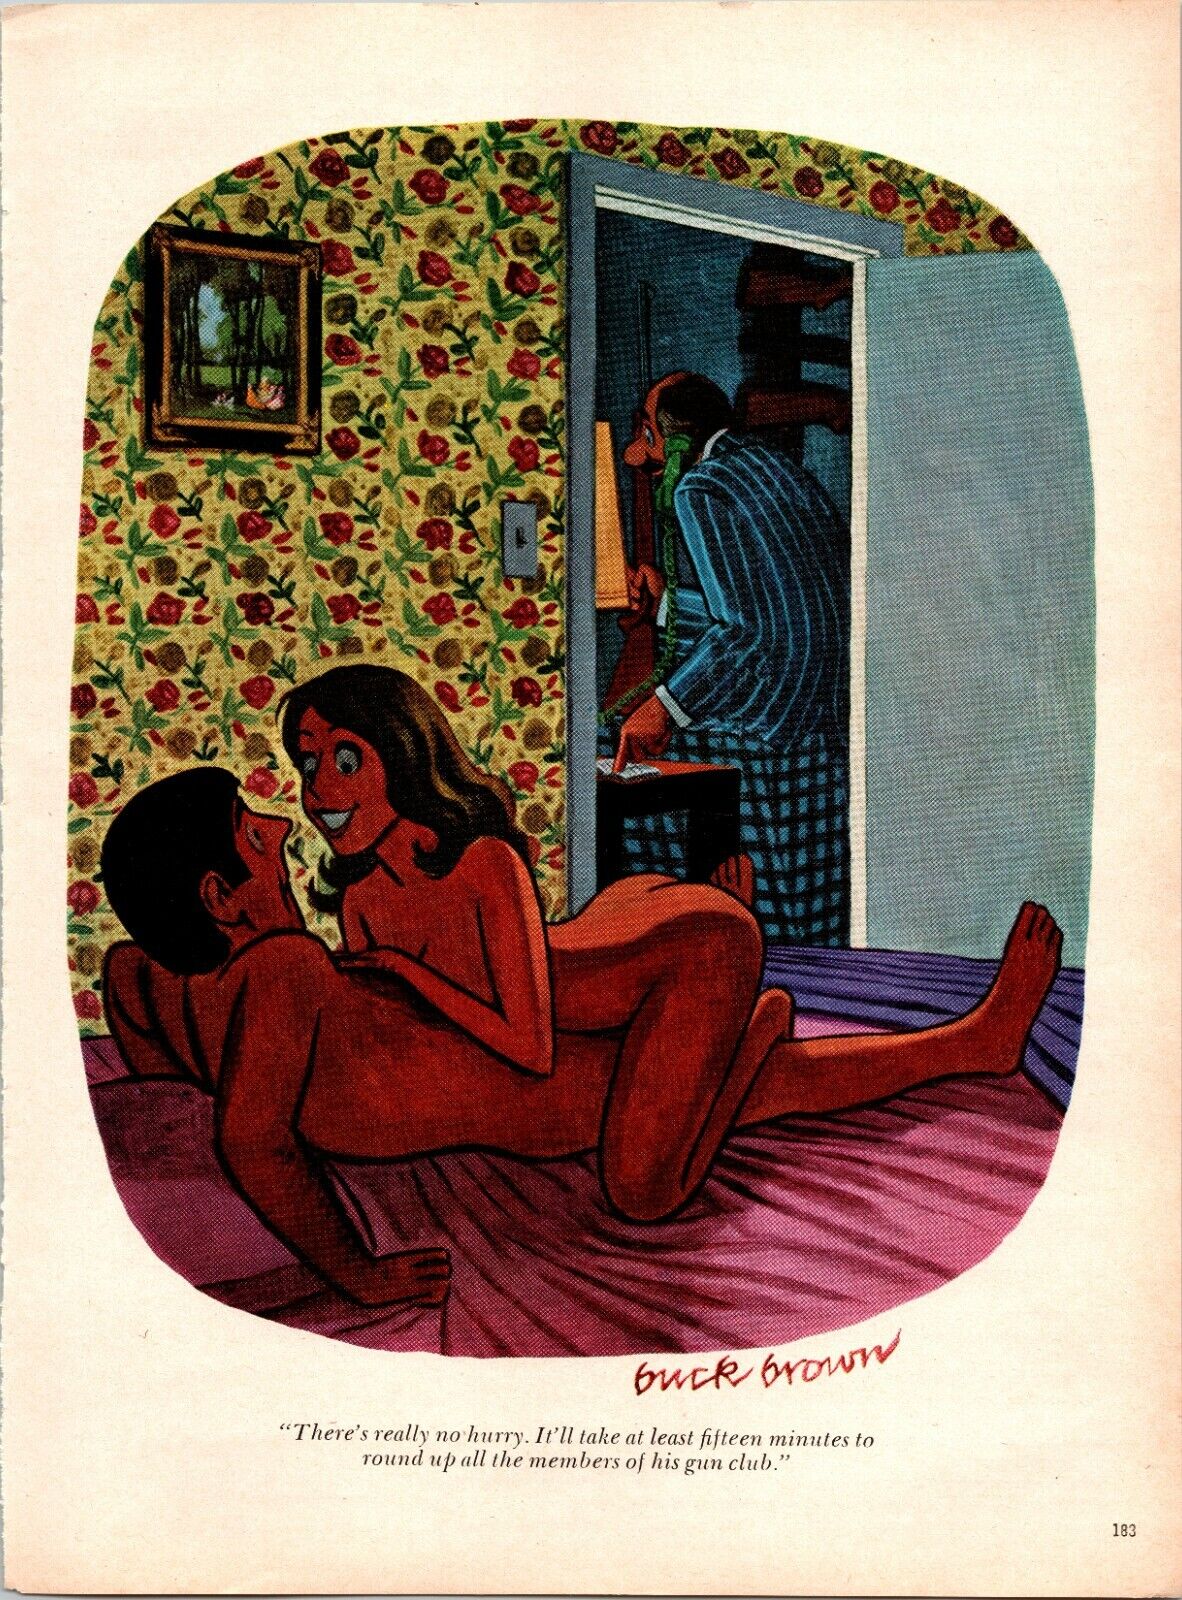 Ephemera, Playboy, Cartoon, Buck Brown, Fifteen Minutes, Round Up, CIRCA 1960s